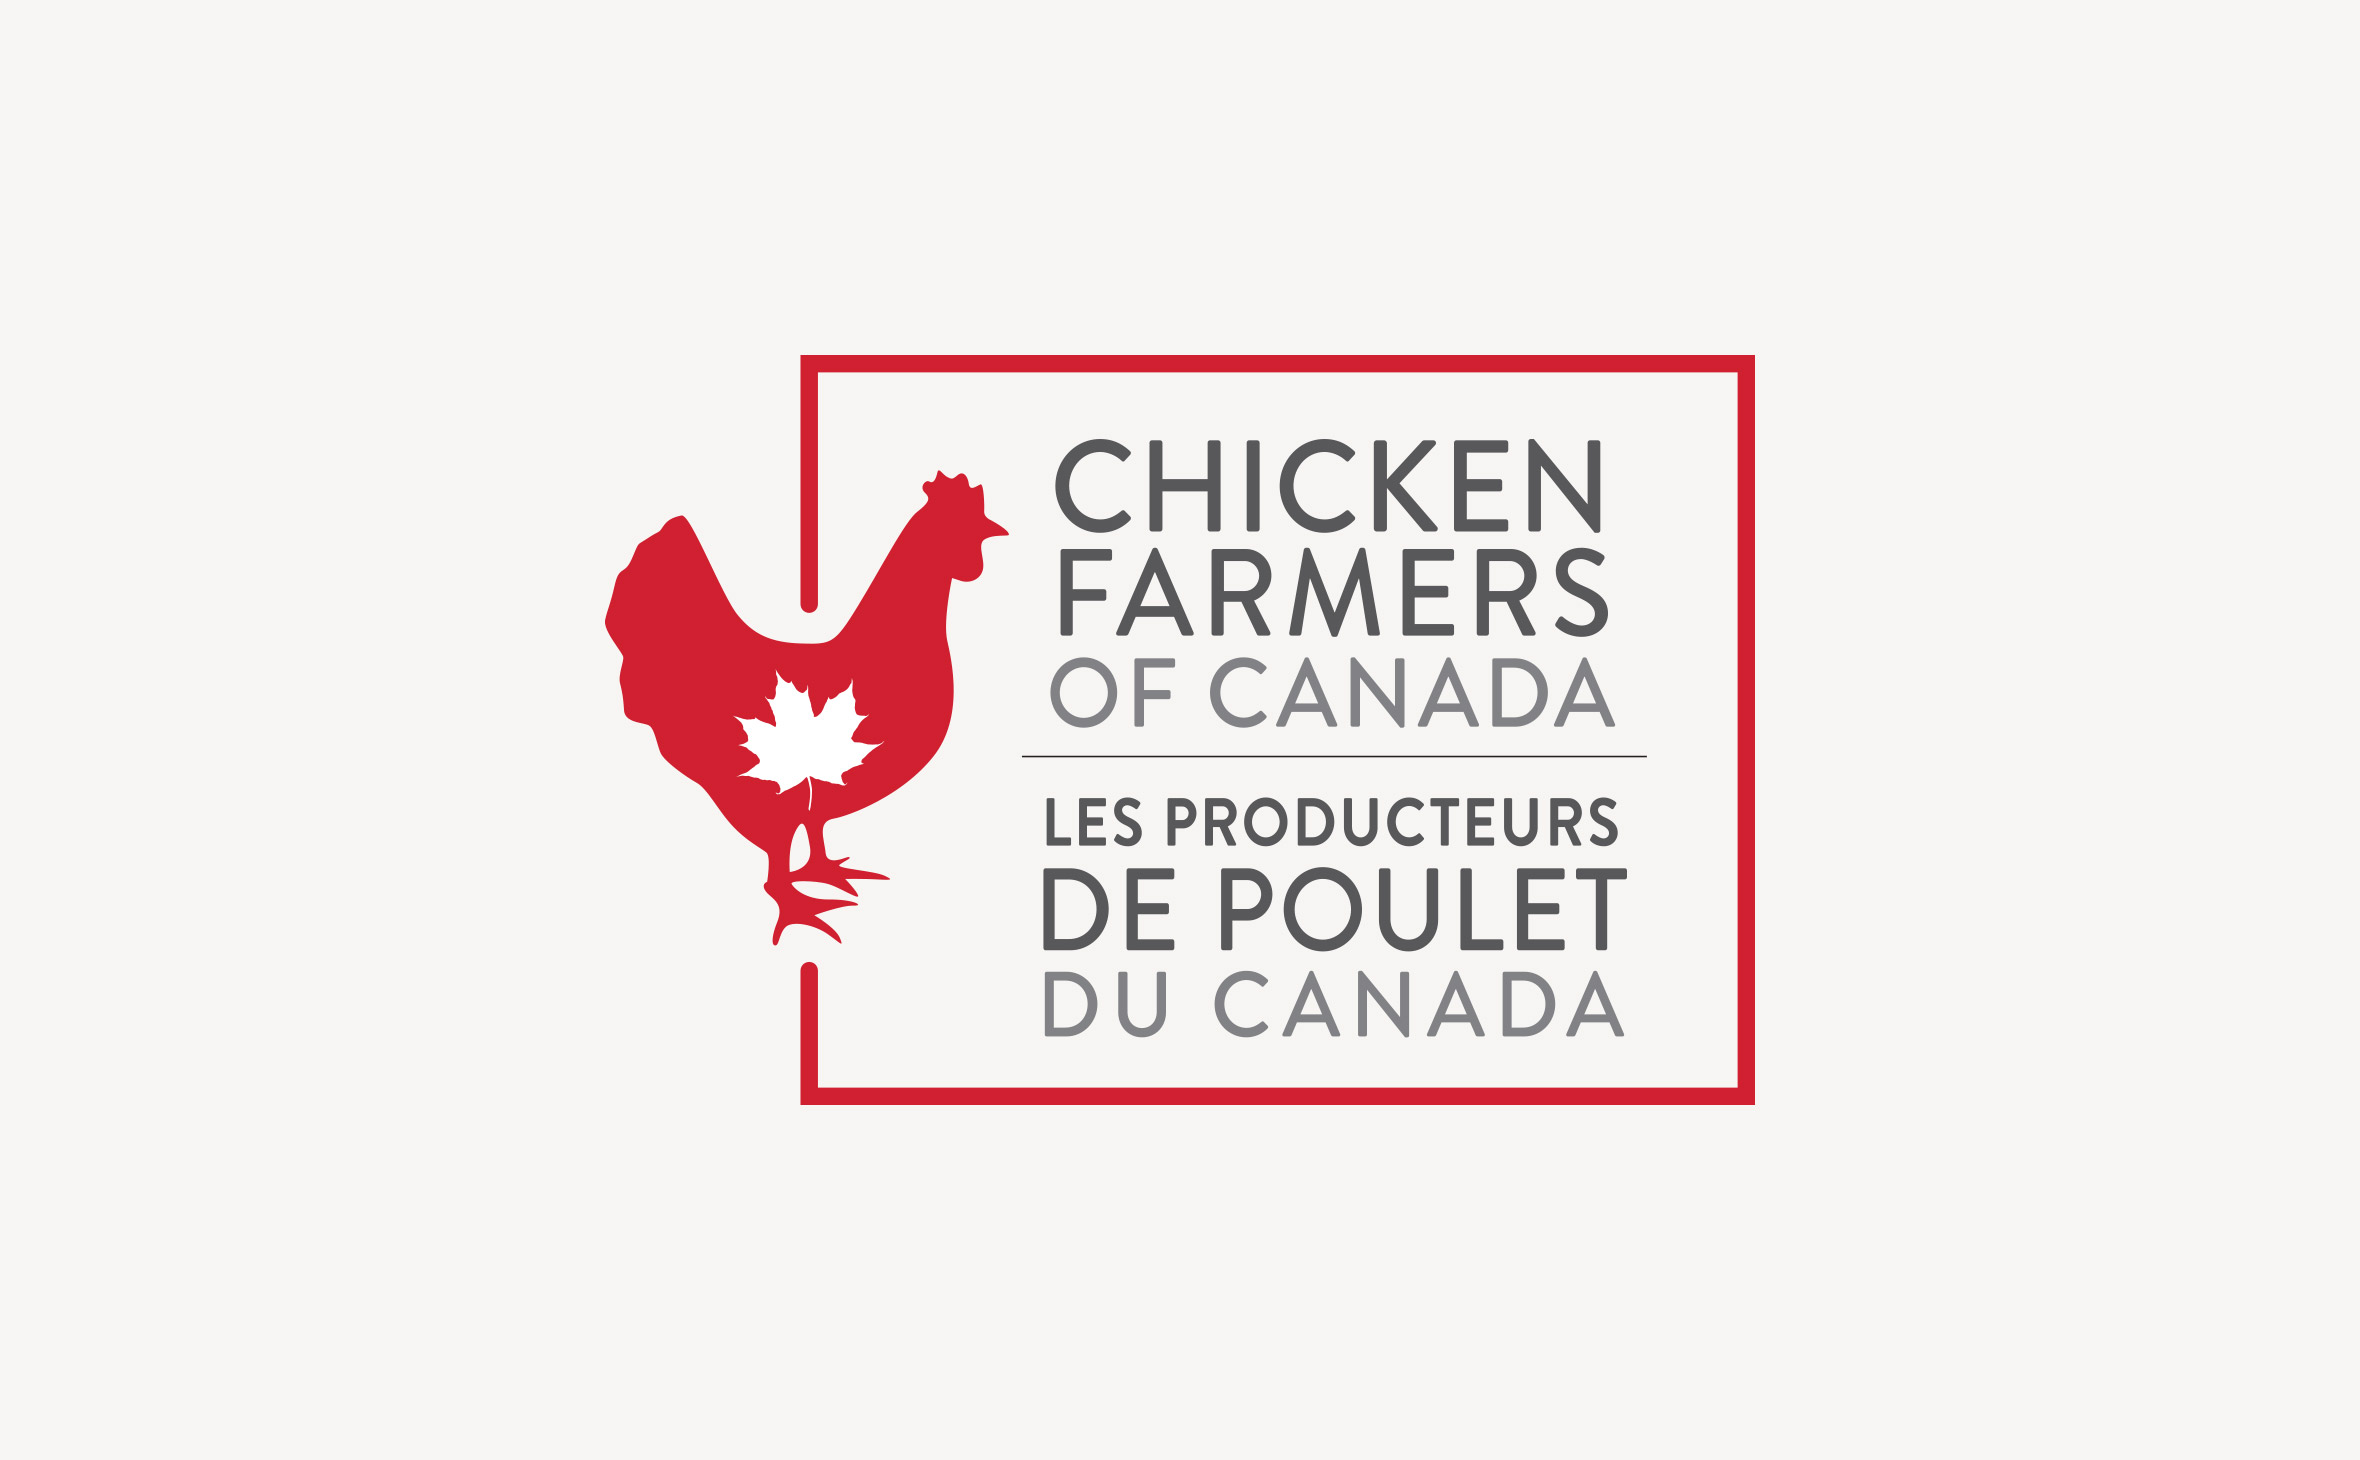 www.chickenfarmers.ca